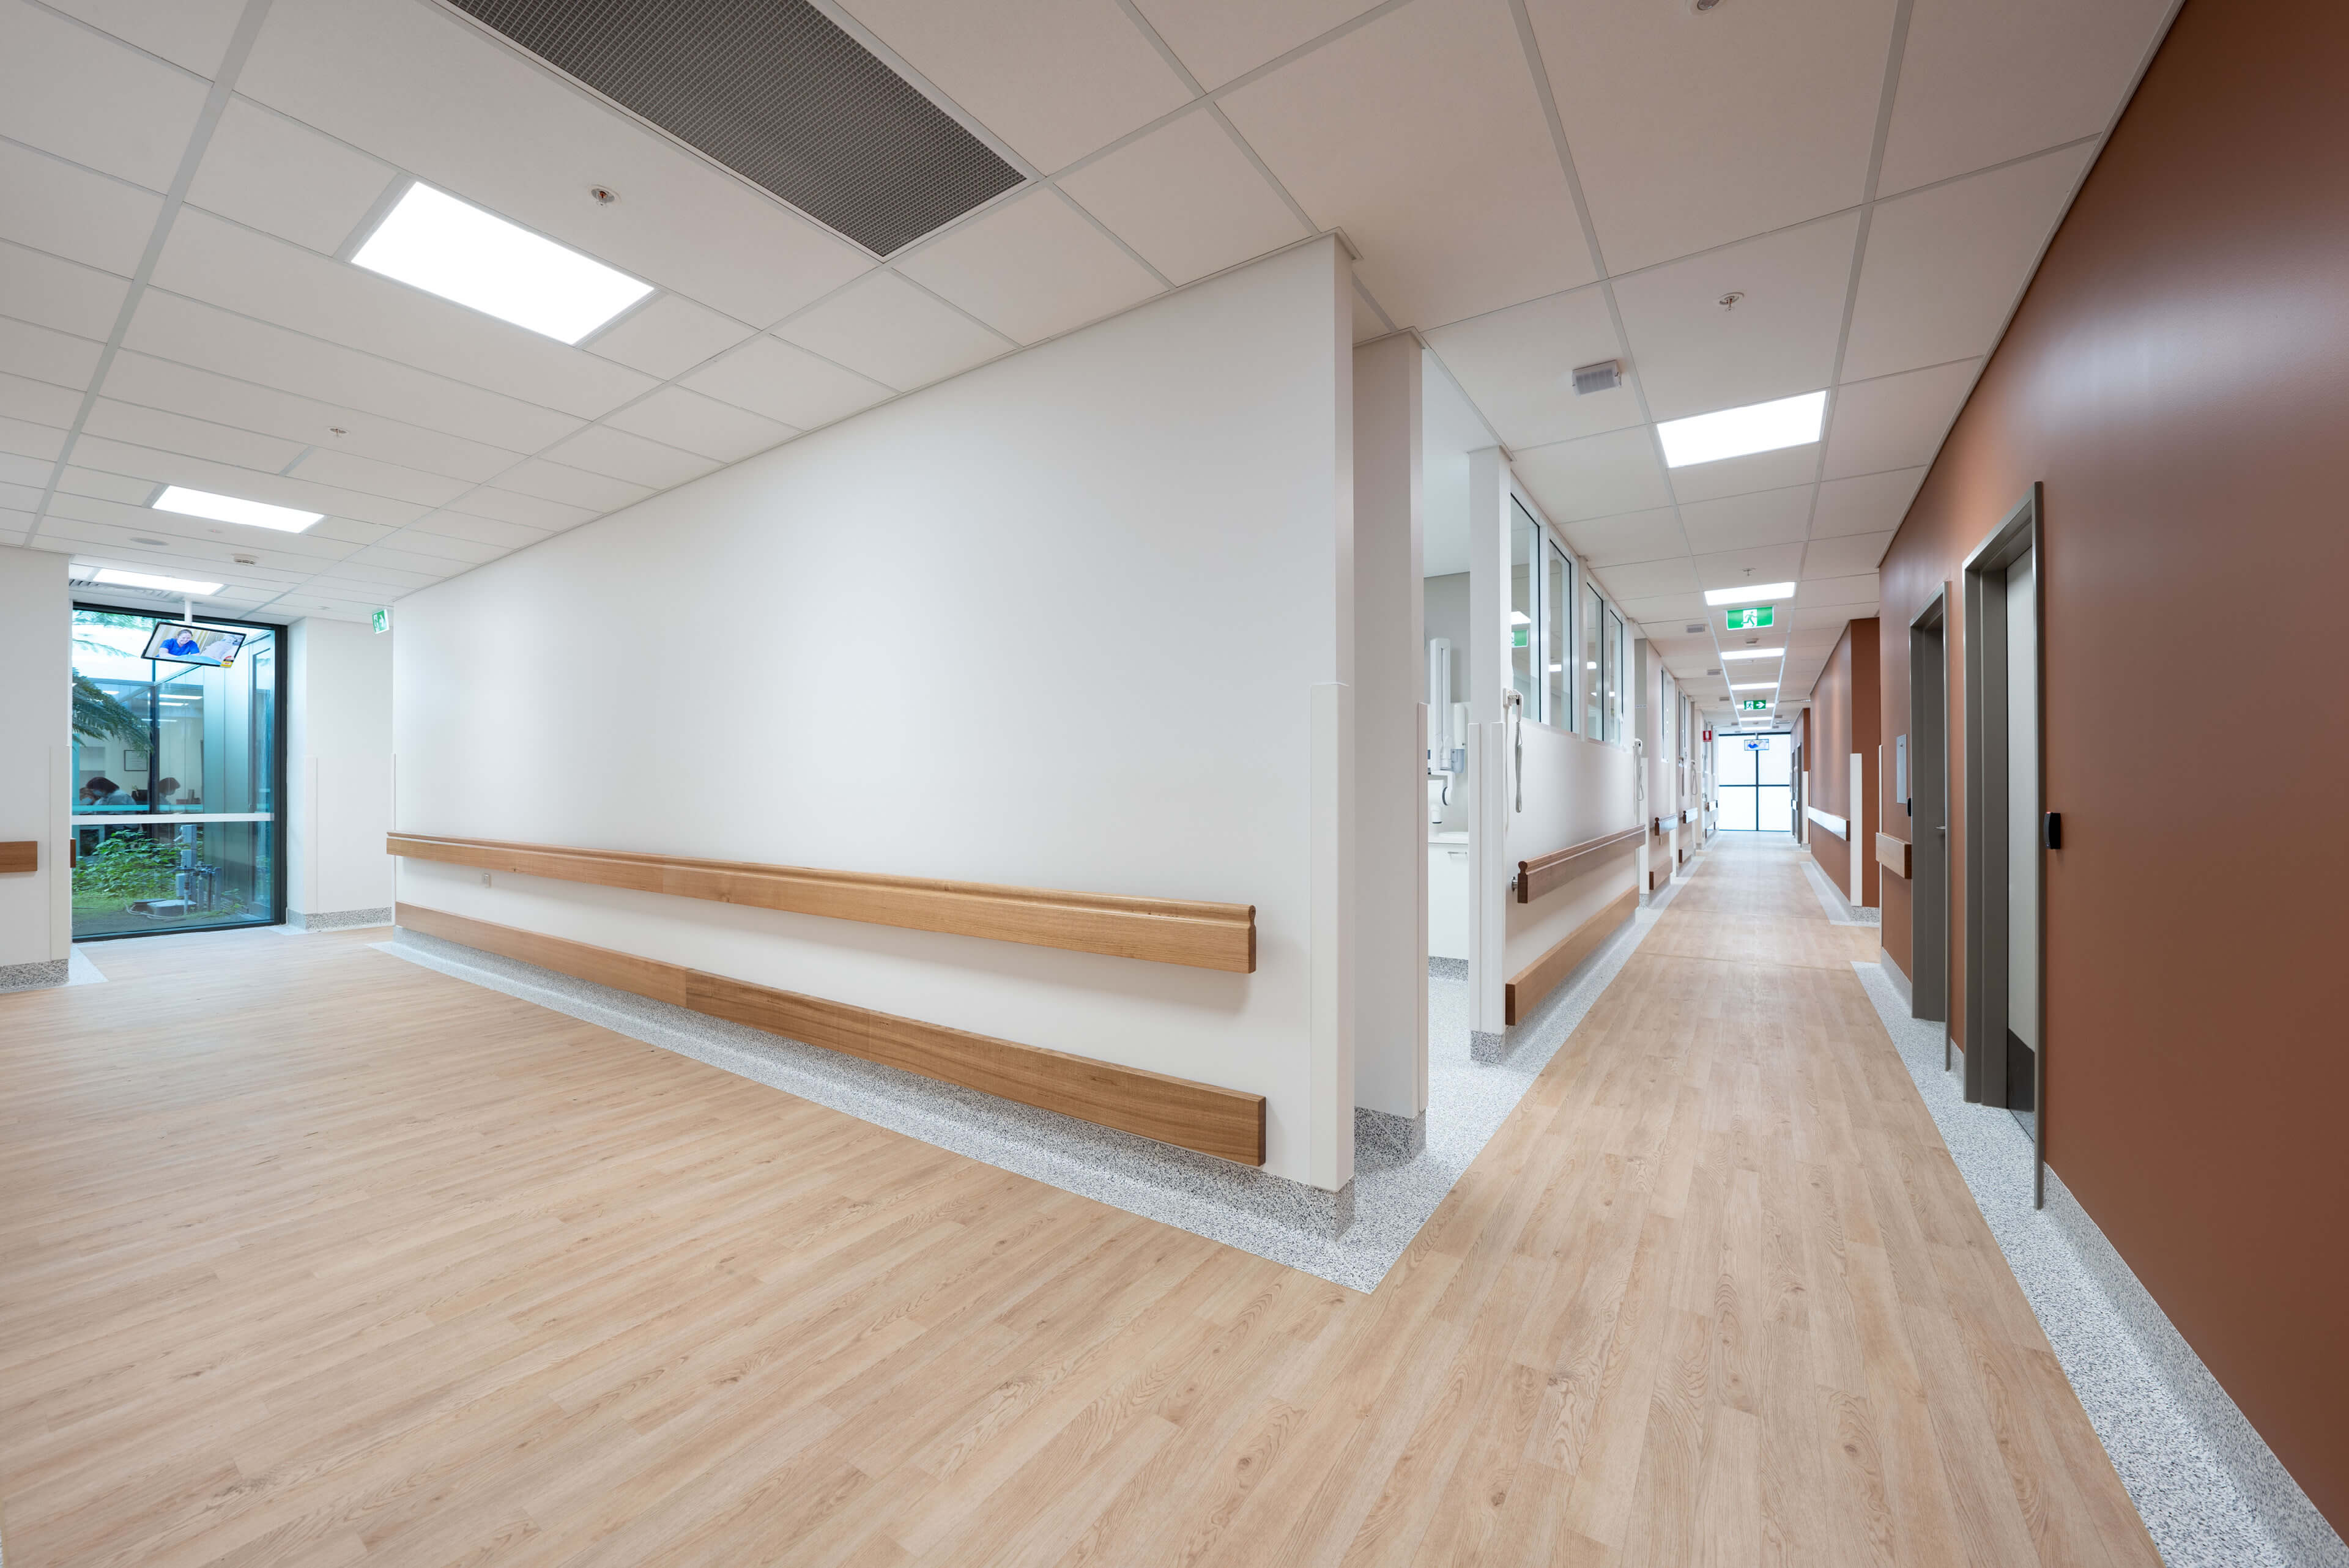 2 interior hallway campbelltown hospital refurbishment taylor construction refurbishment live environments